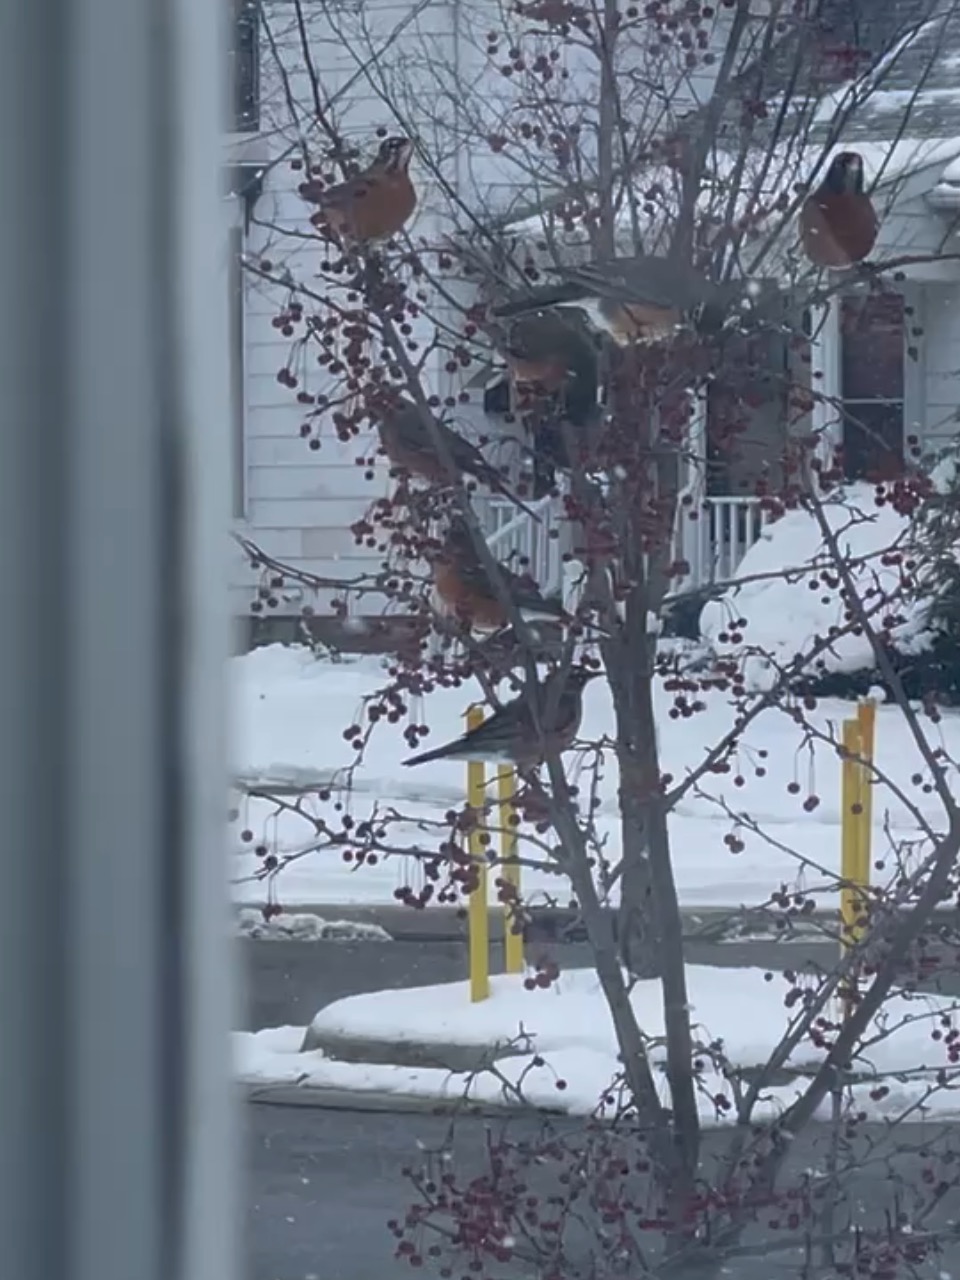 robins seen through window on crabapple tree on snowy day